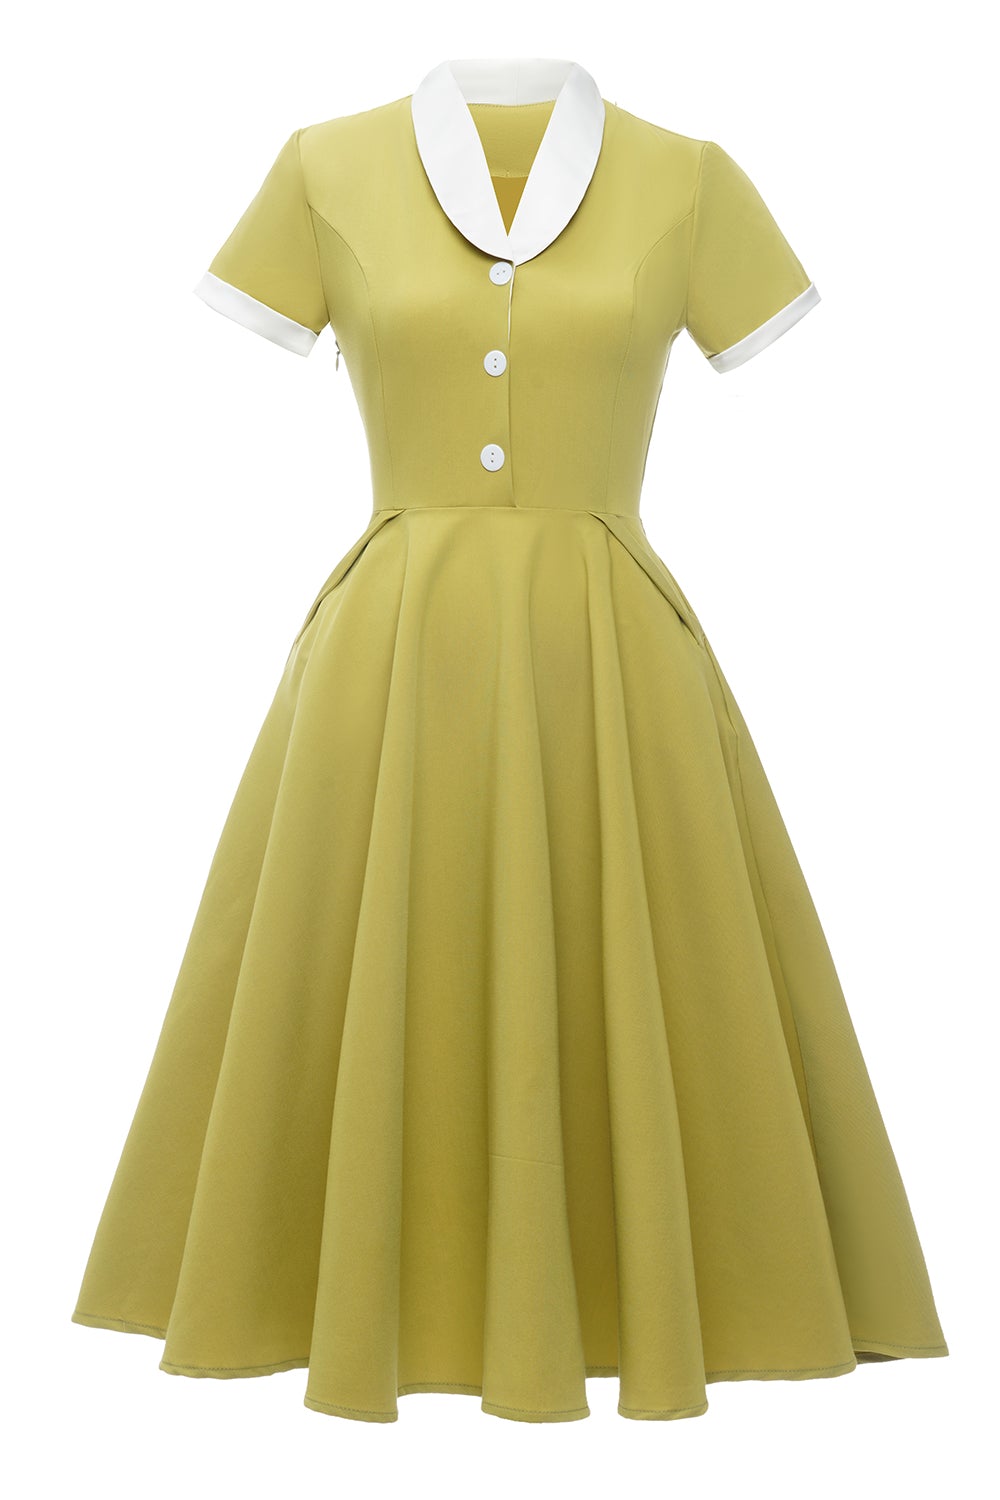 V Neck Lemon Yellow Vintage Dress with Short Sleeves